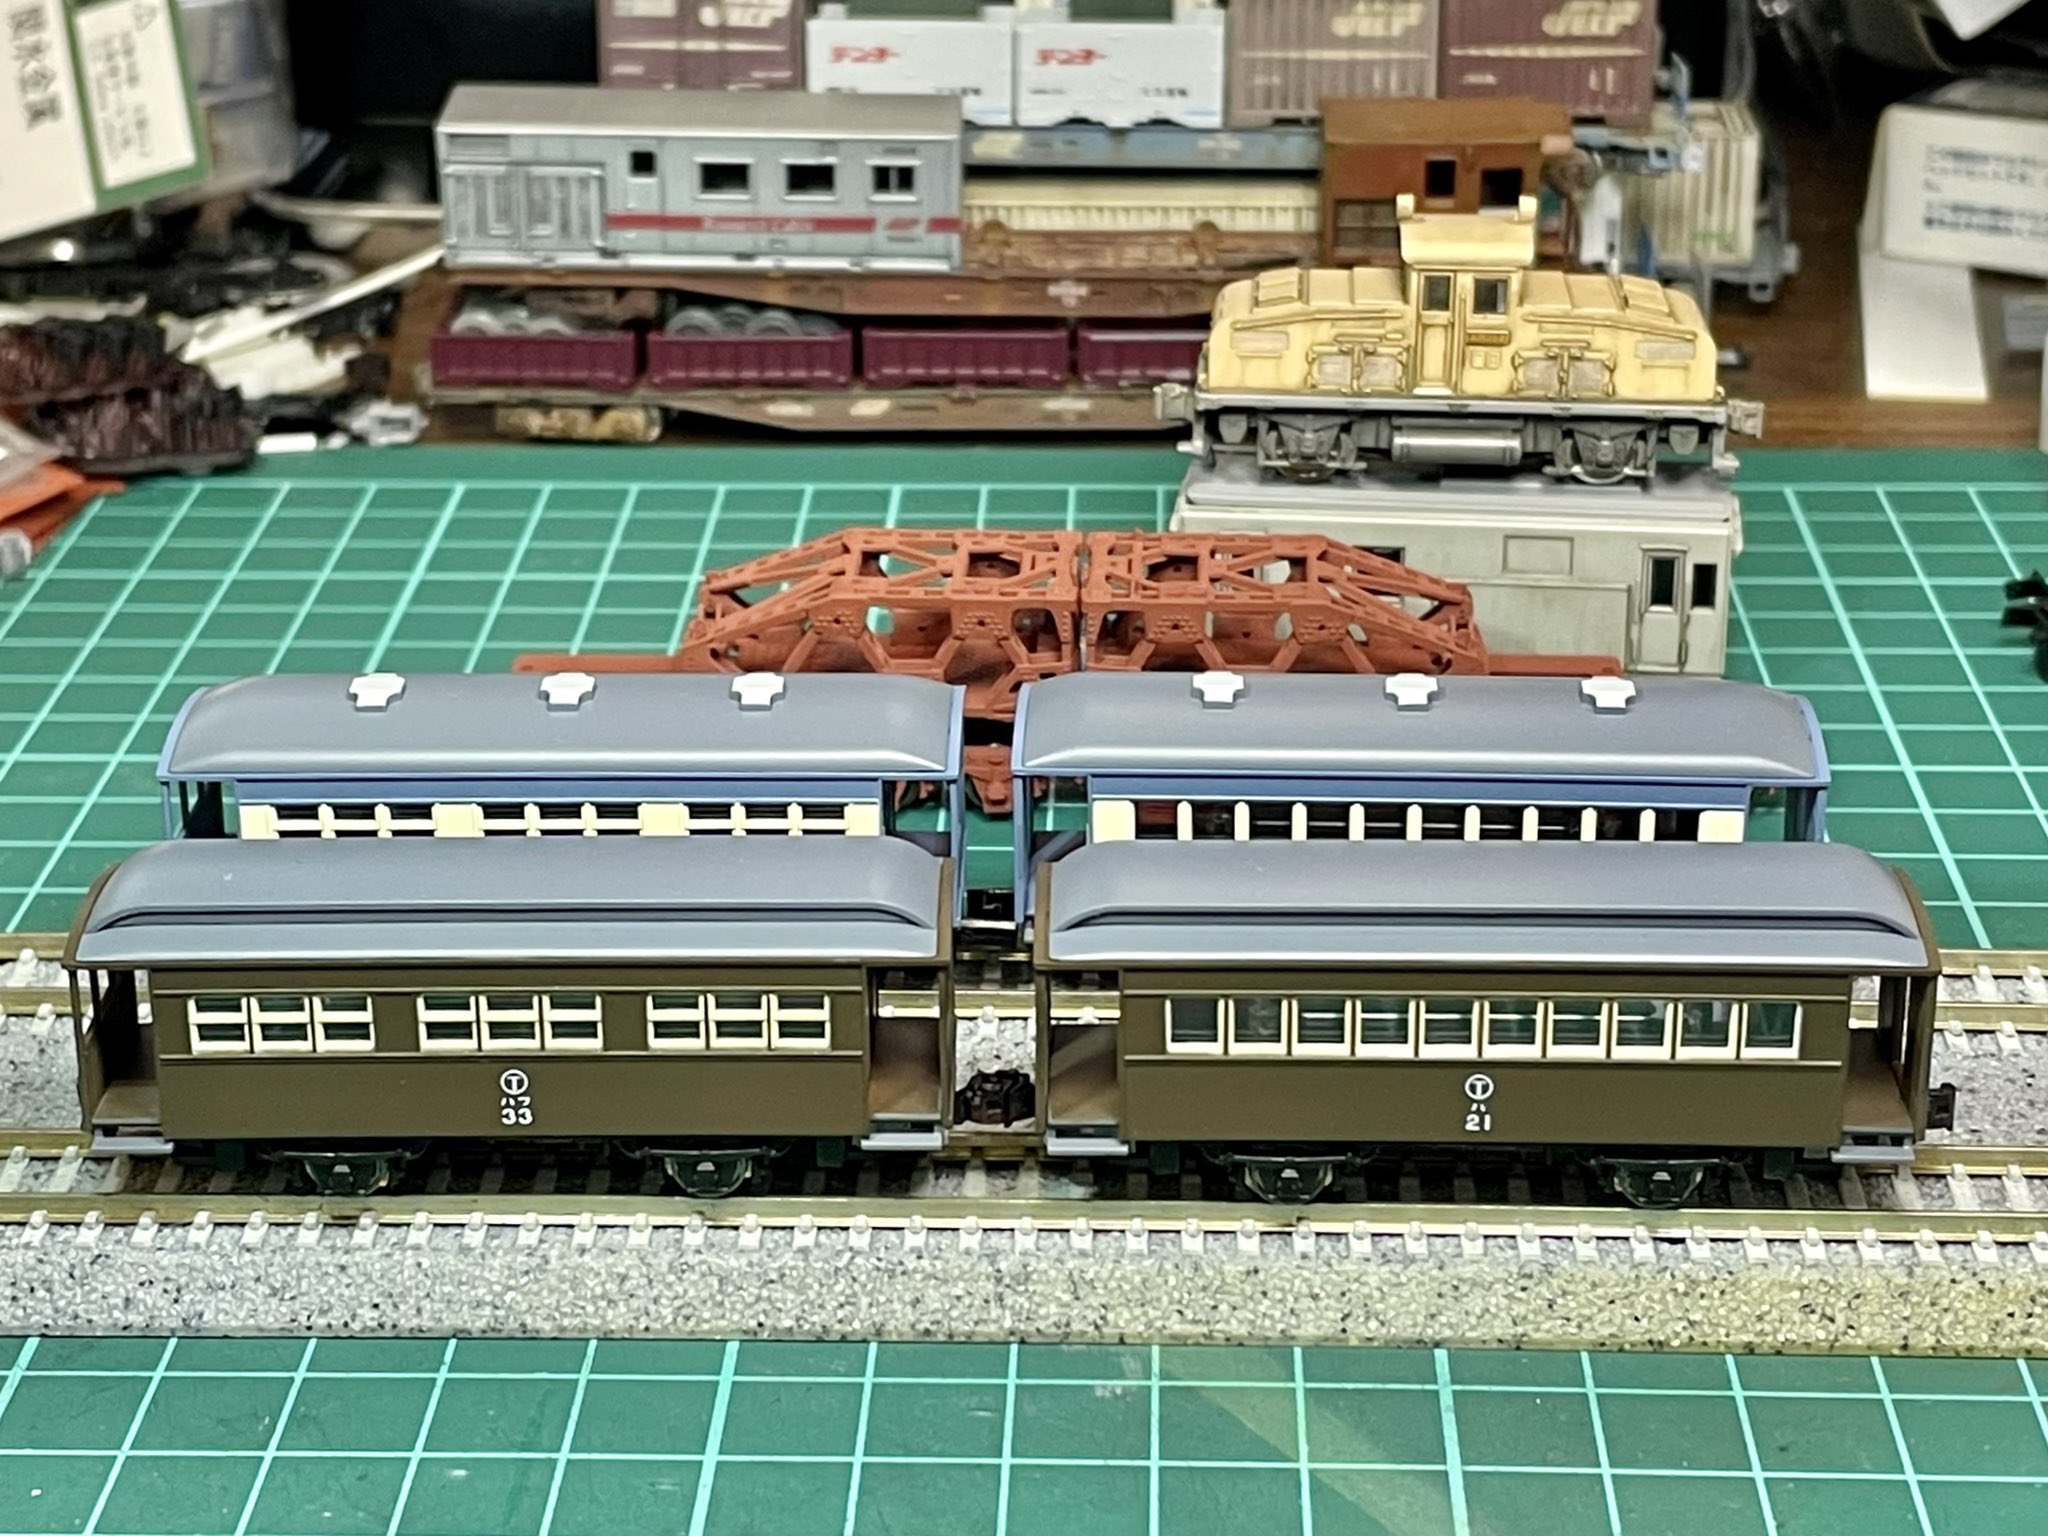 Pochi。工房 ：4/30 鉄道模型市（浜松町） on Twitter: 